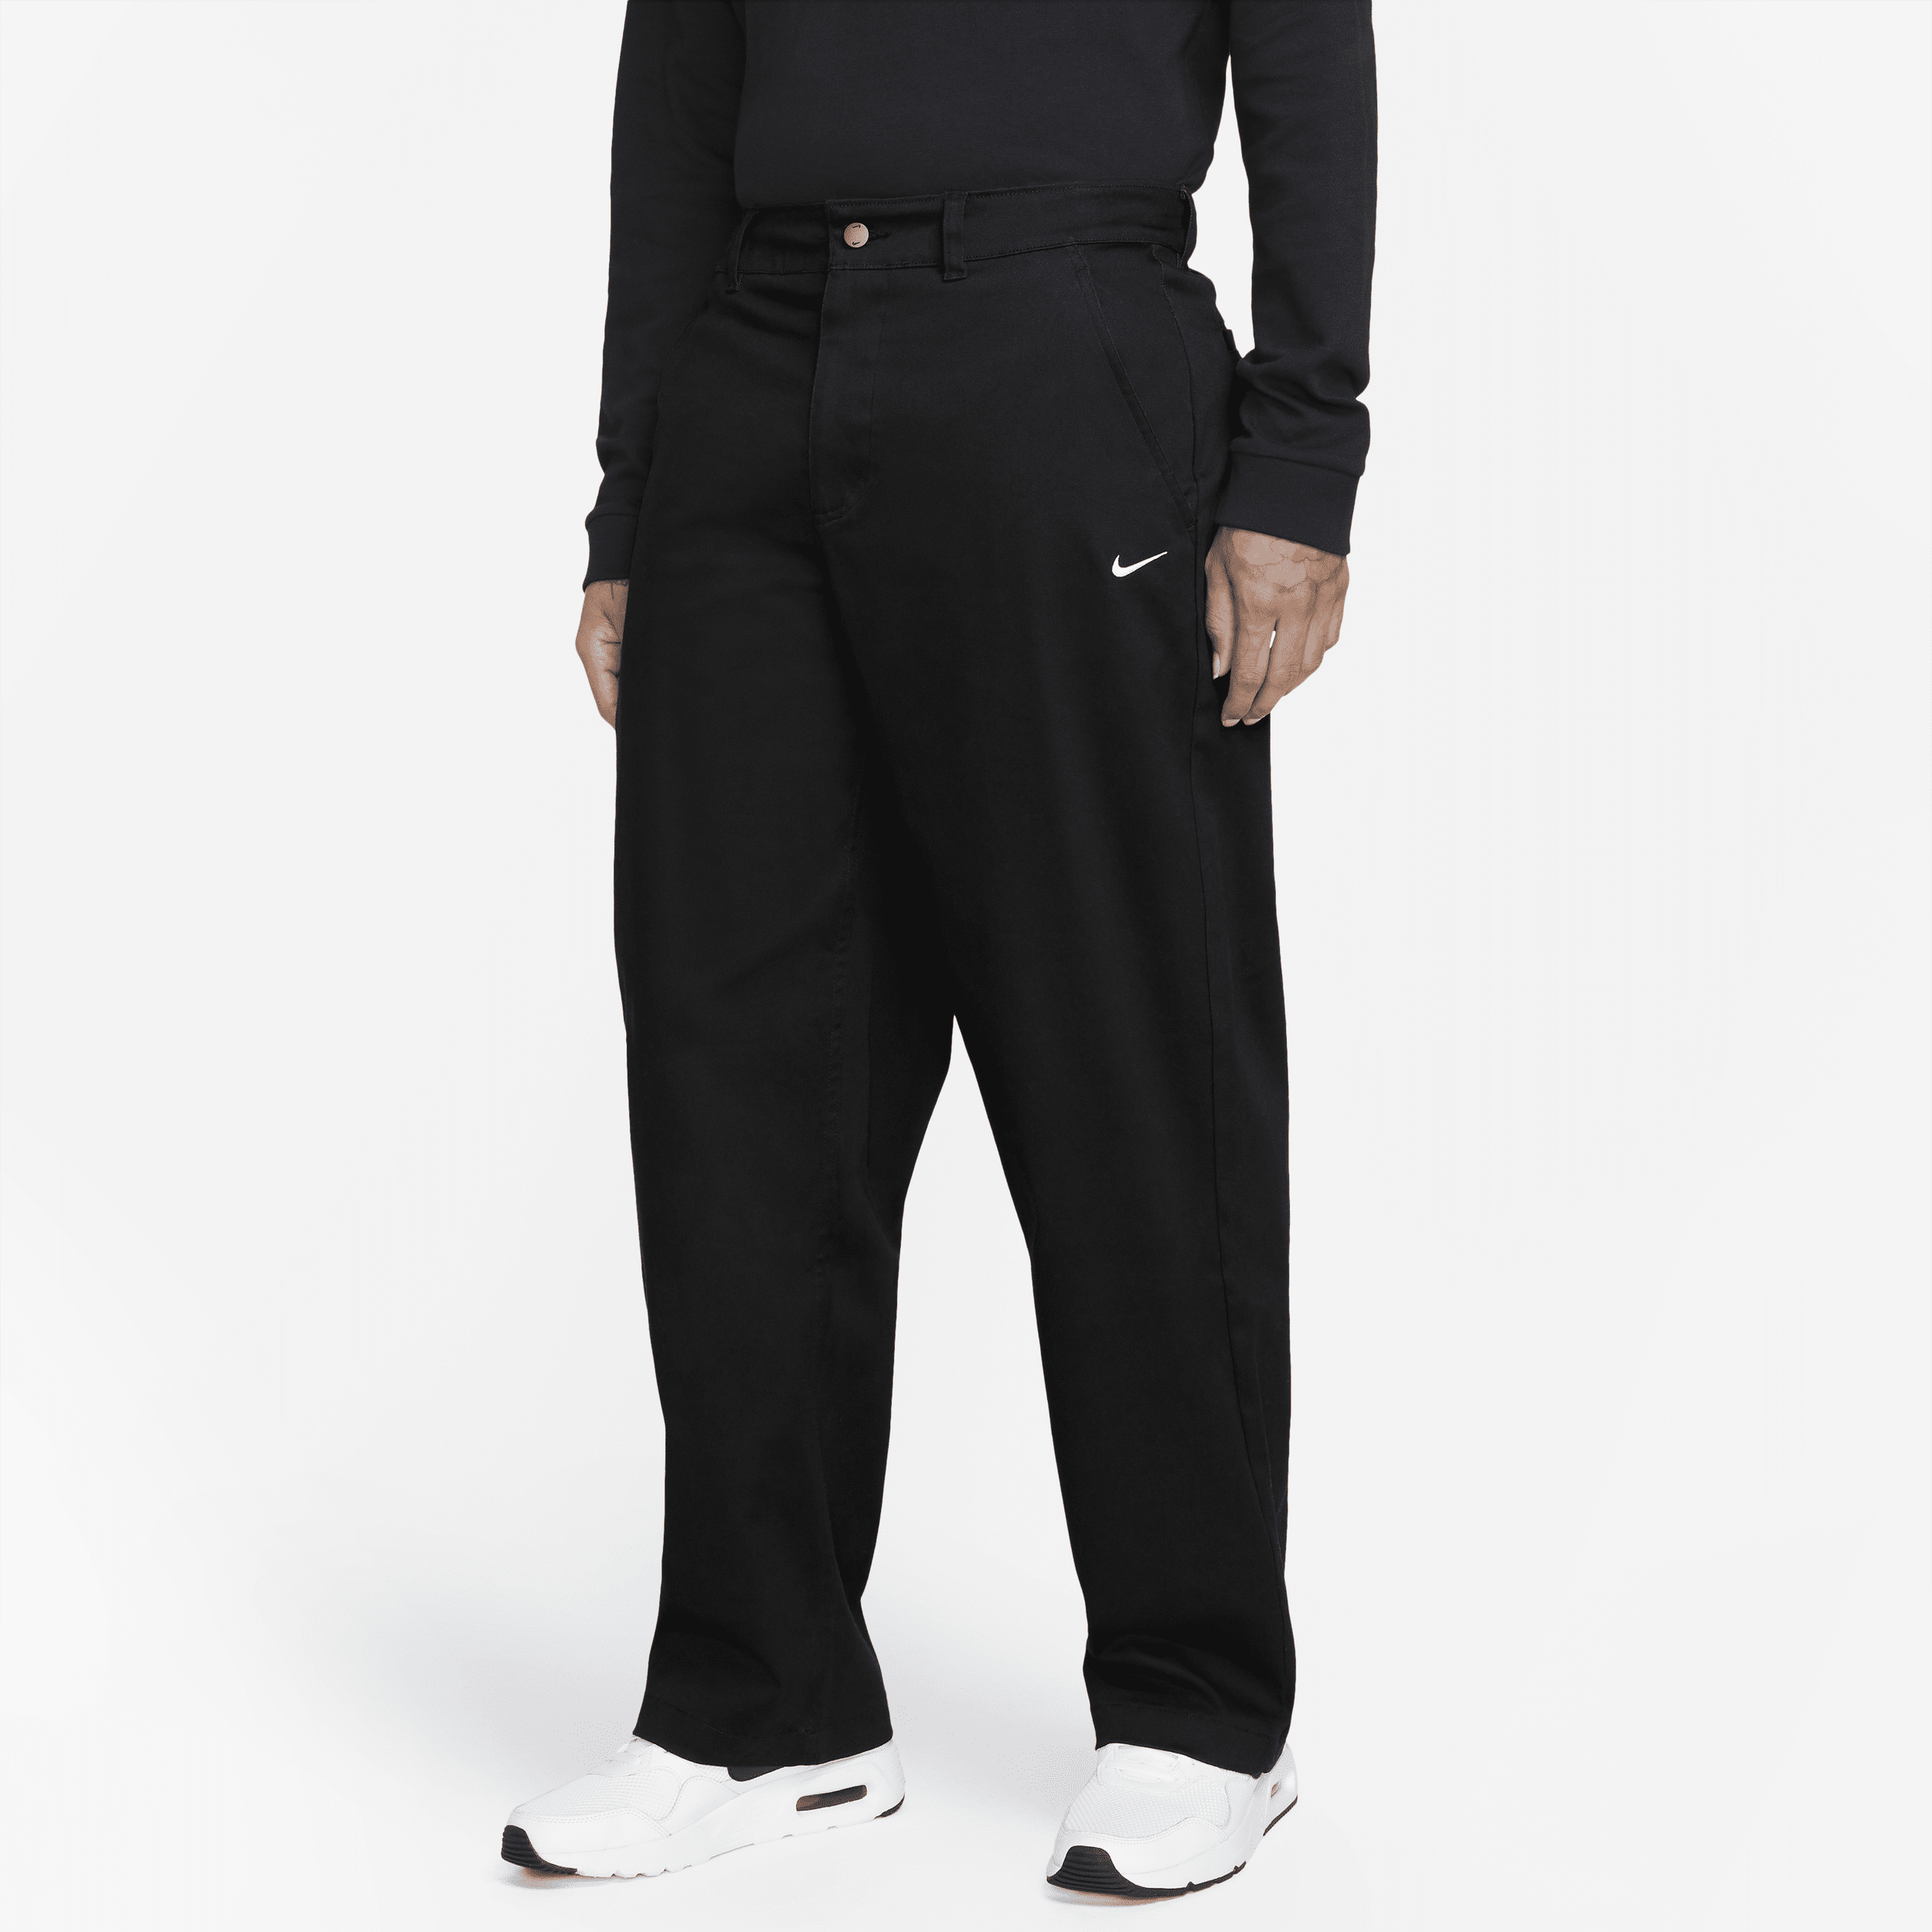 Pantaloni El Chino Nike Life – Uomo - Nero